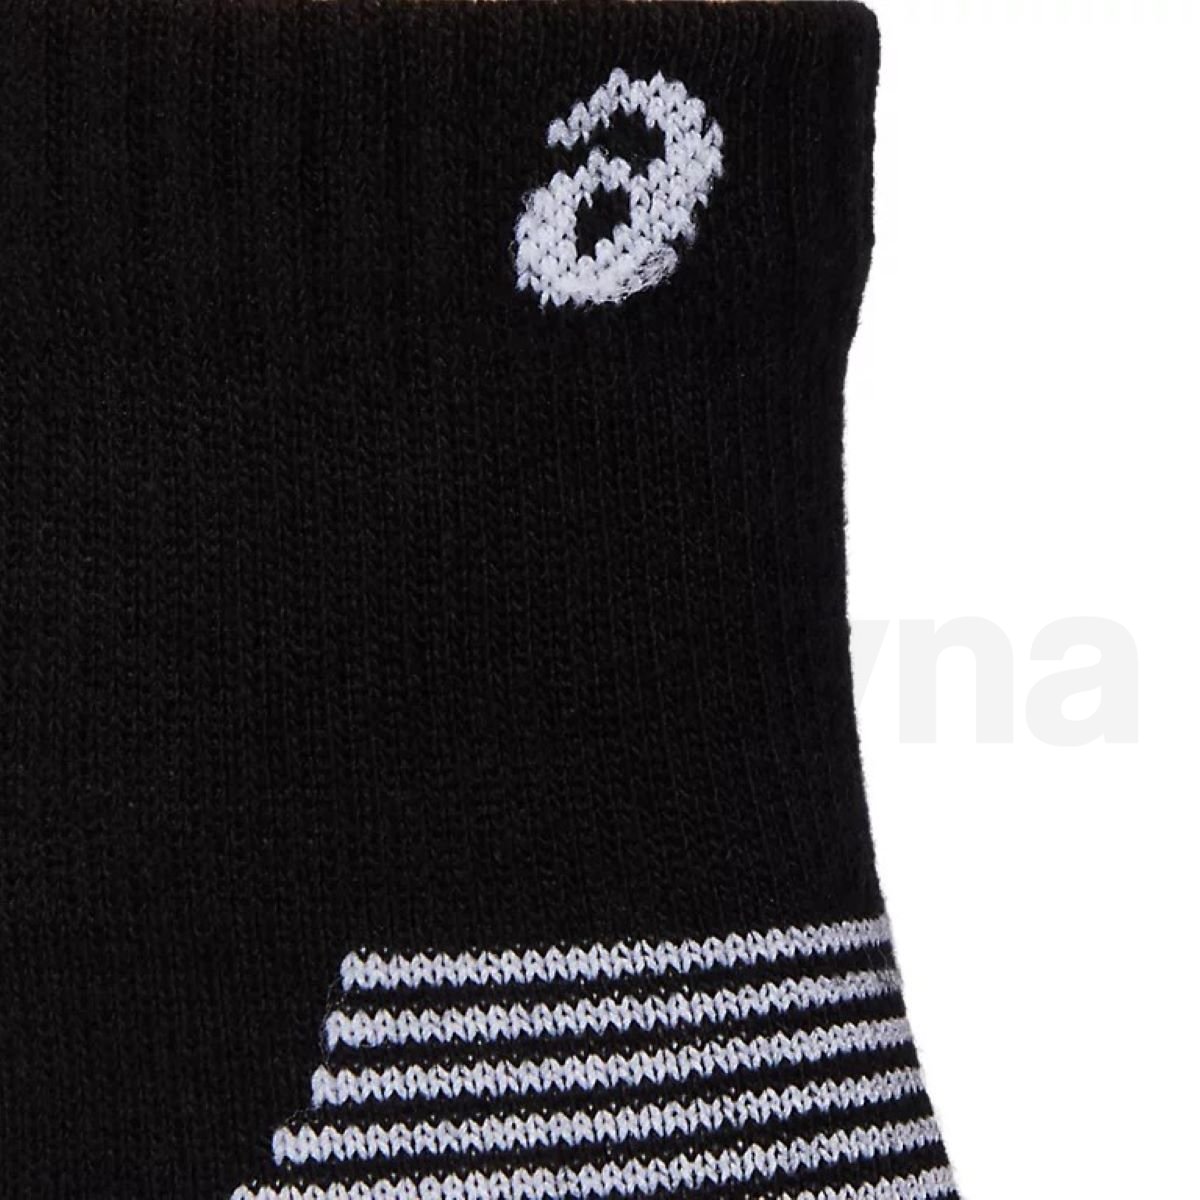 Ponožky Asics 2PPK Cushion Run Quarter Sock - bílá/modrá/černá